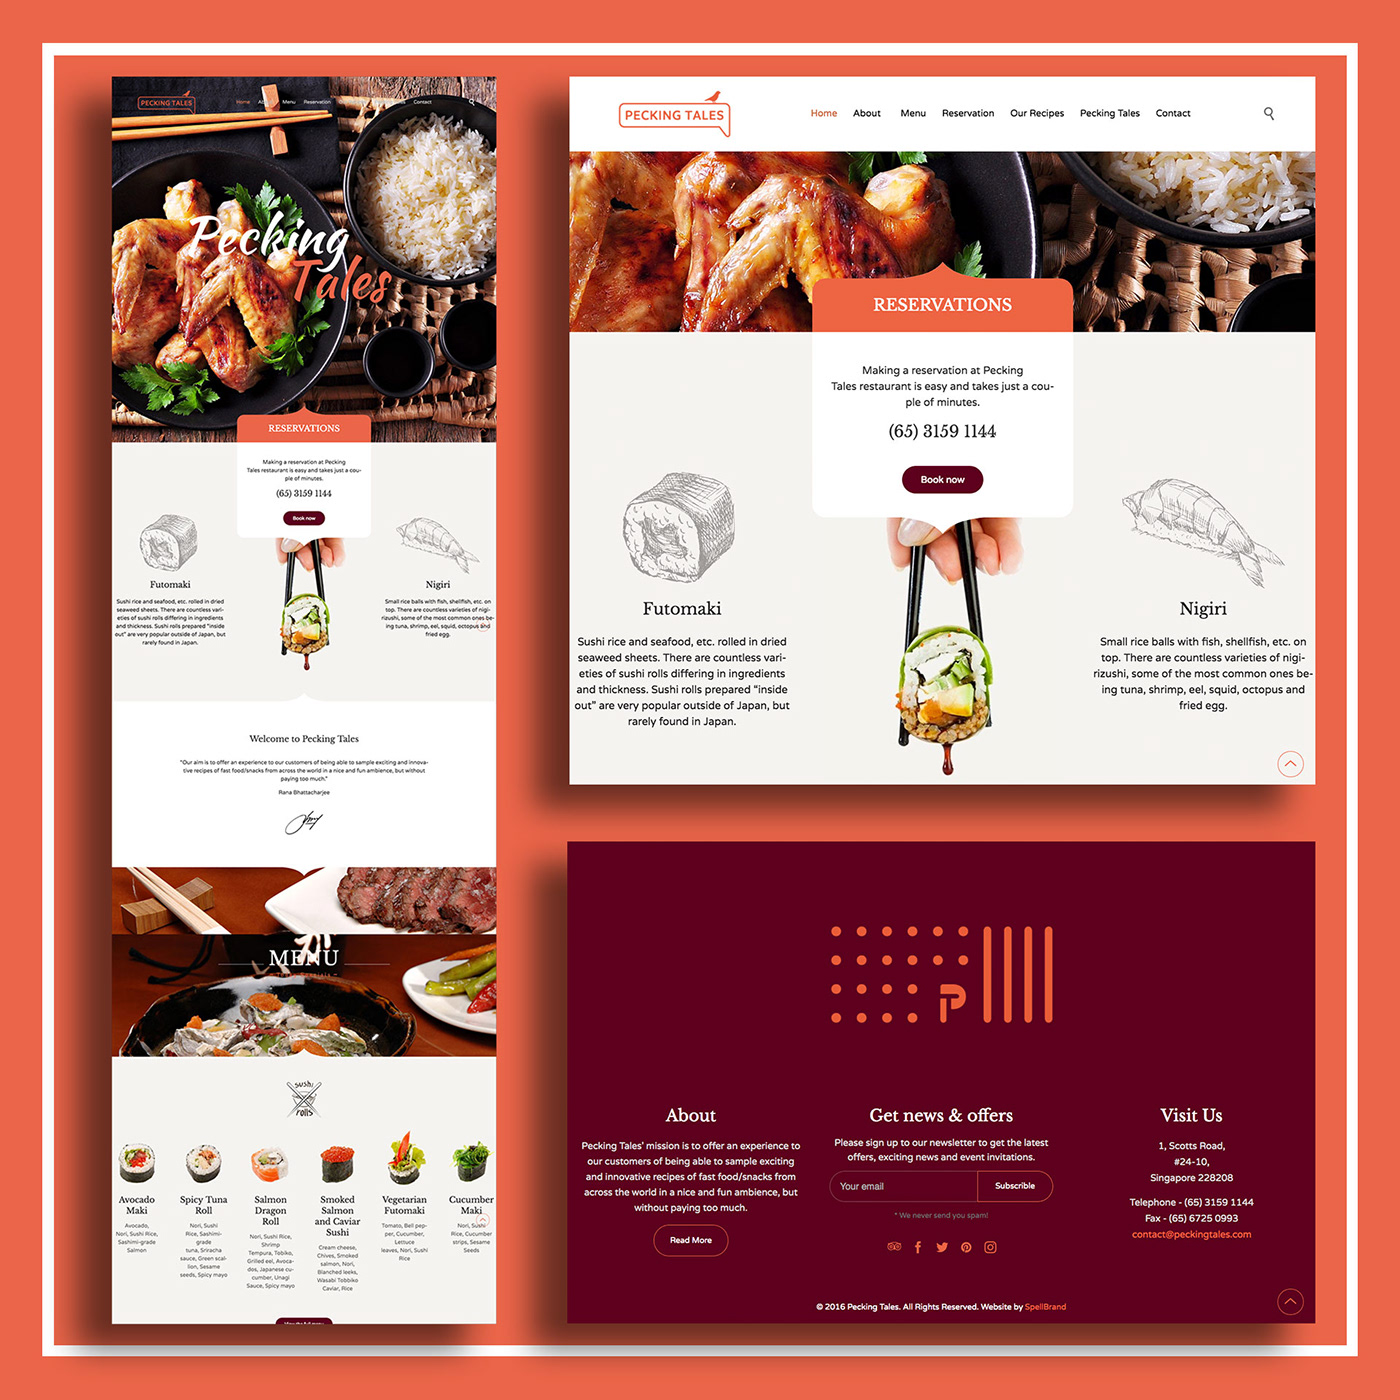 fast food restaurant brand Serving International Fusion Food Recipes. singapore Hong Kong New York London